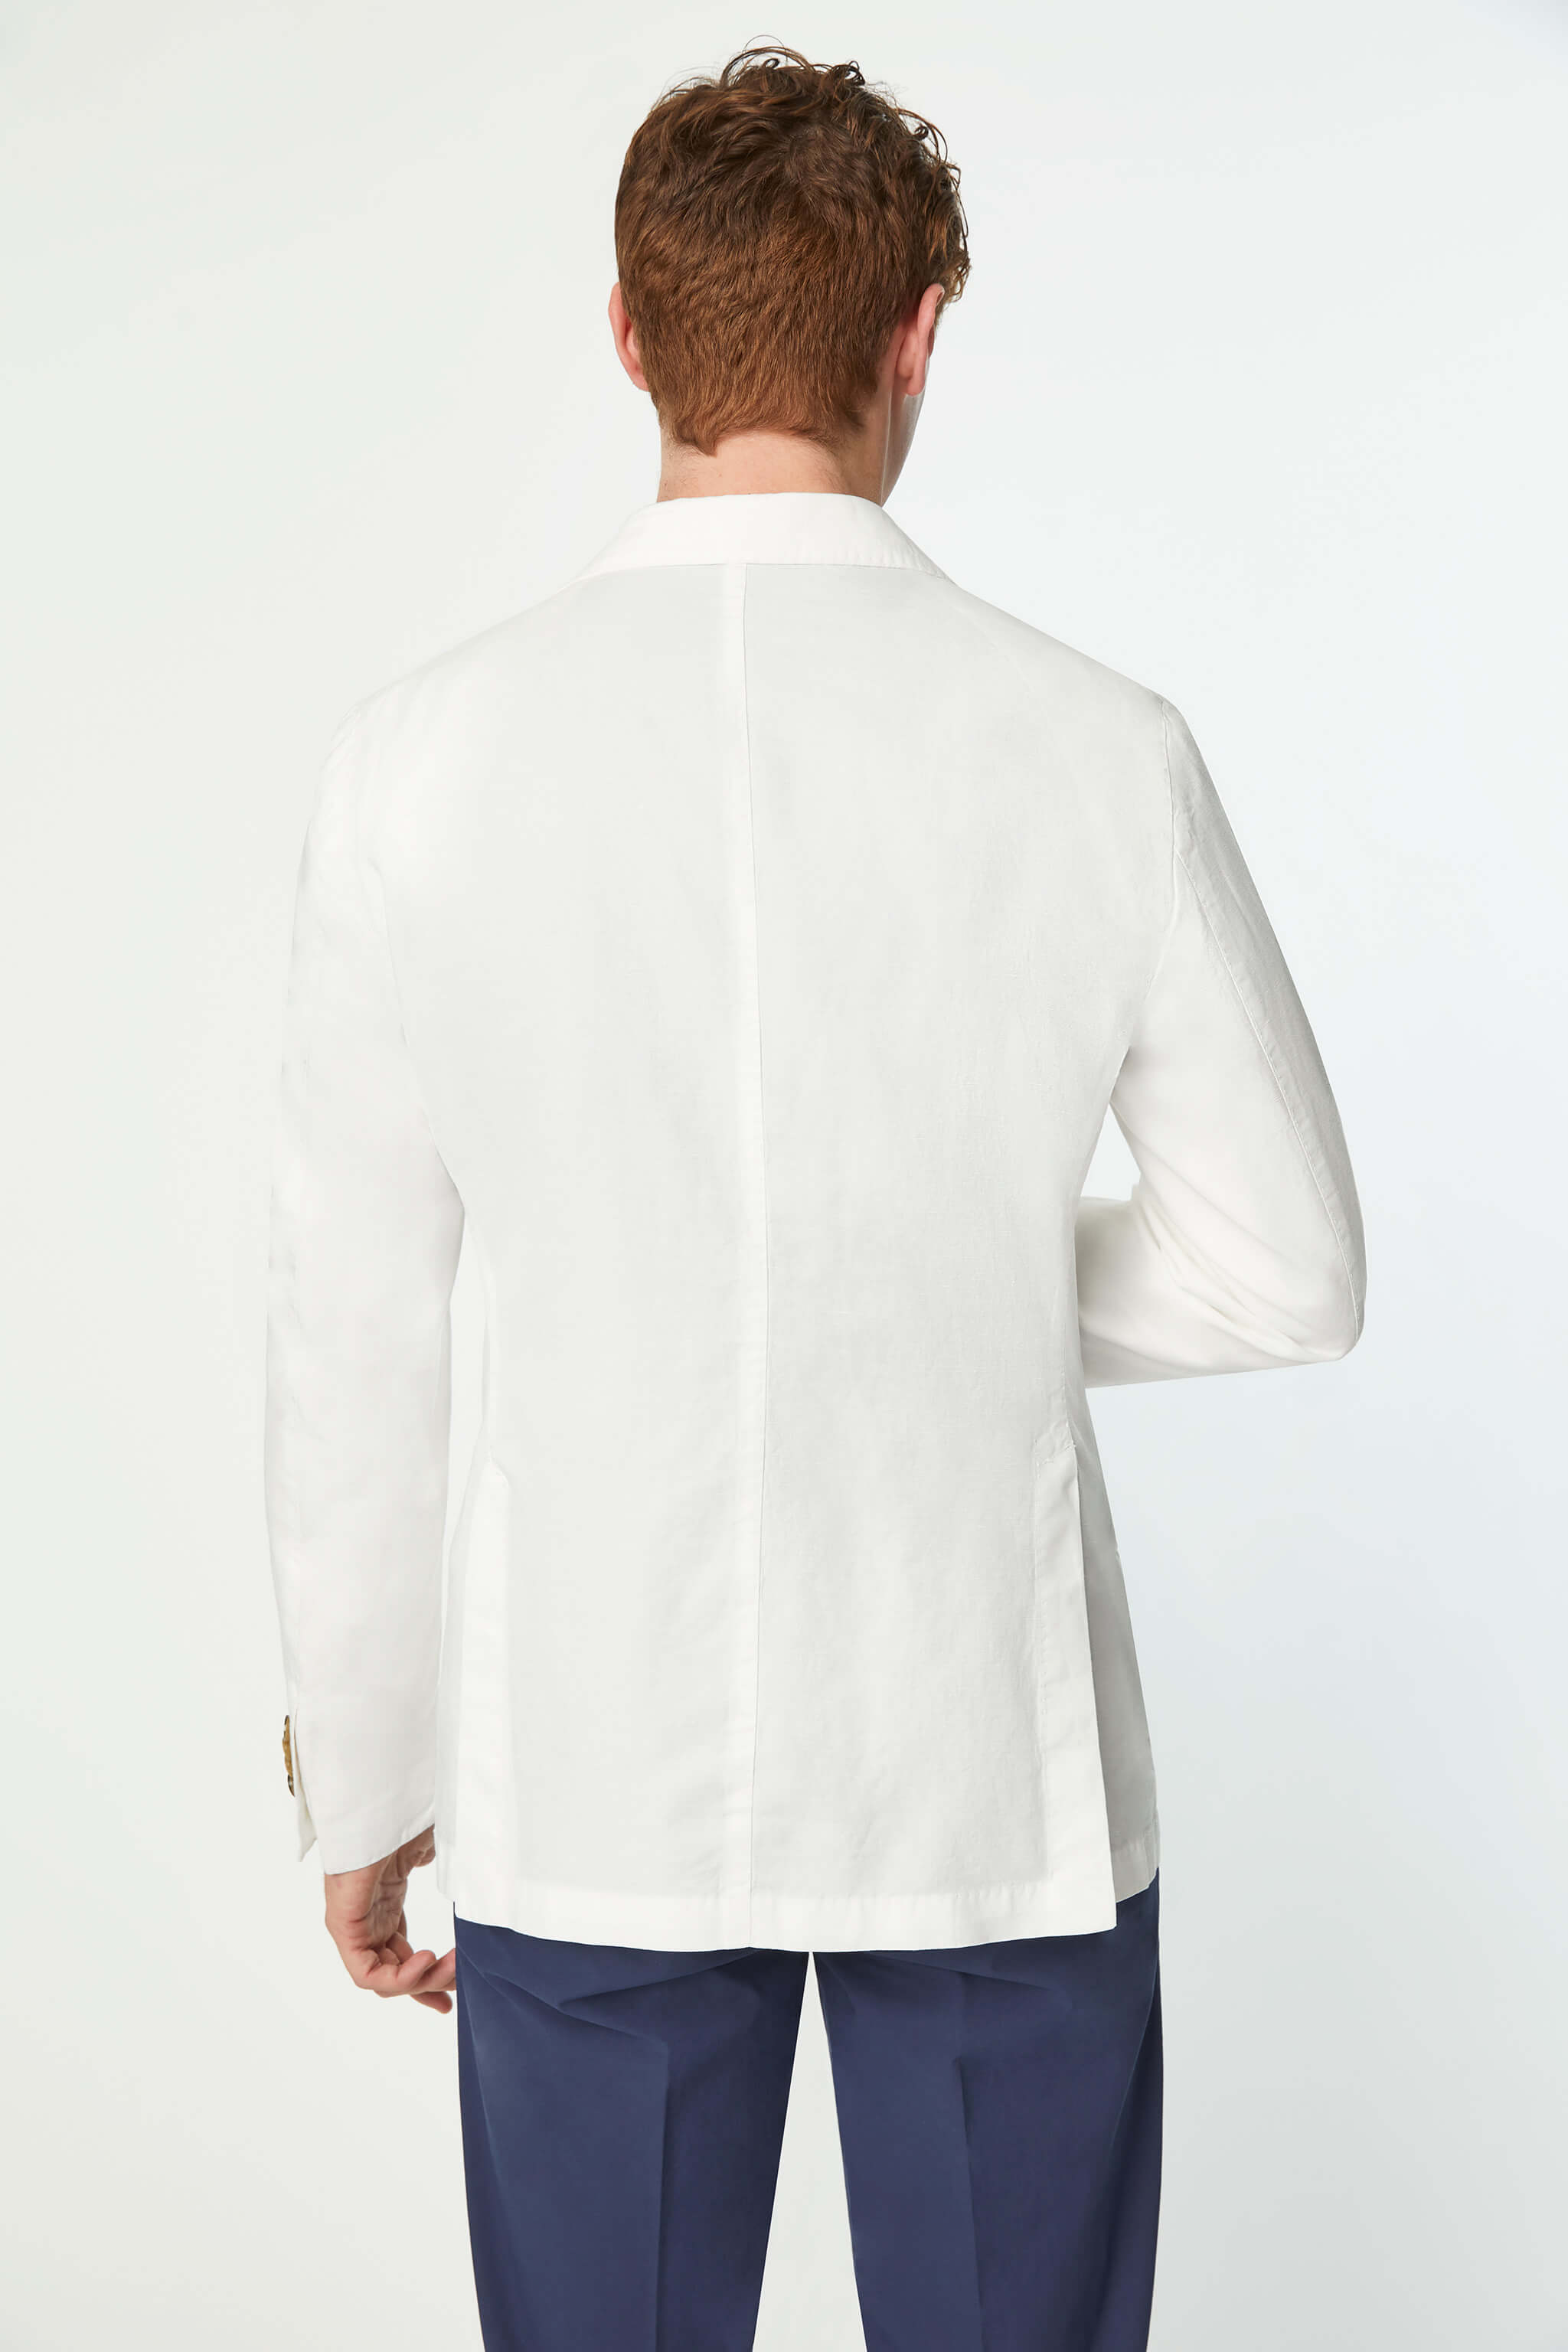 Garment-dyed JACK jacket in White